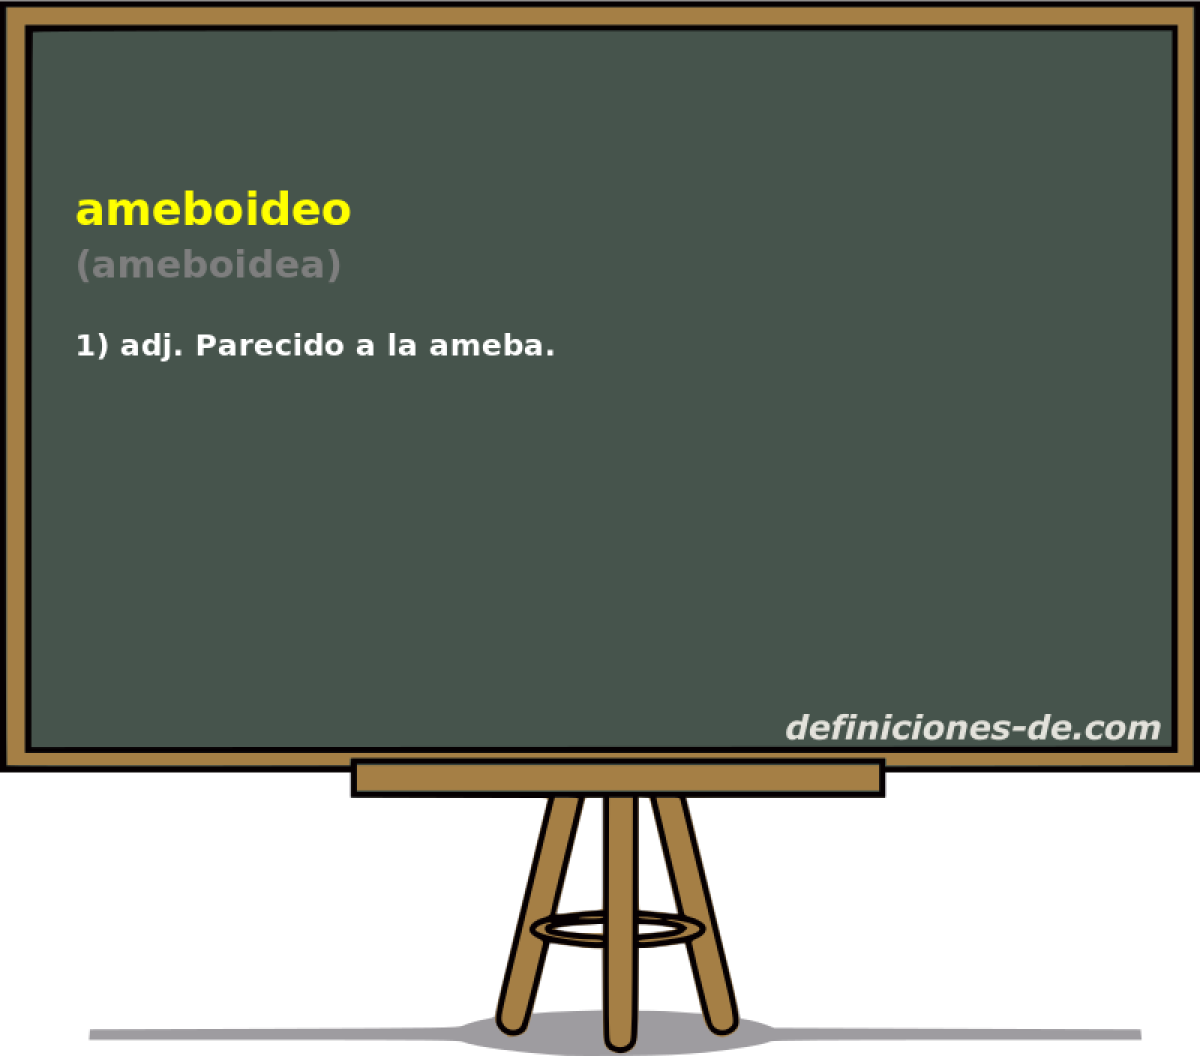 ameboideo (ameboidea)